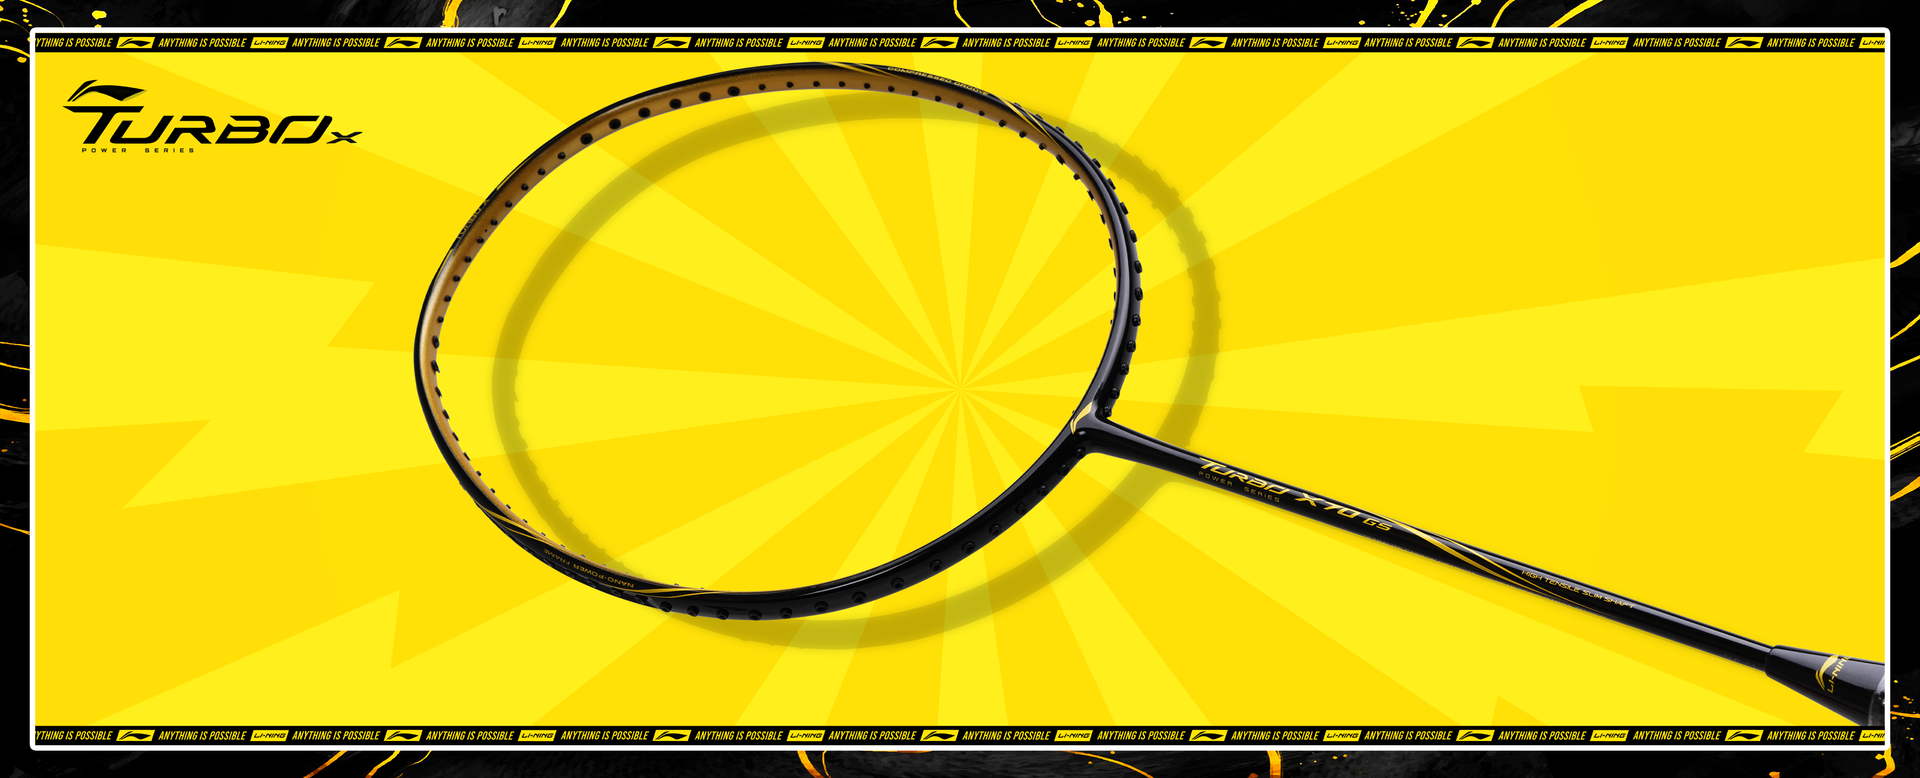 Turbo X G5 power series badminton racket by Li-Ning Studio